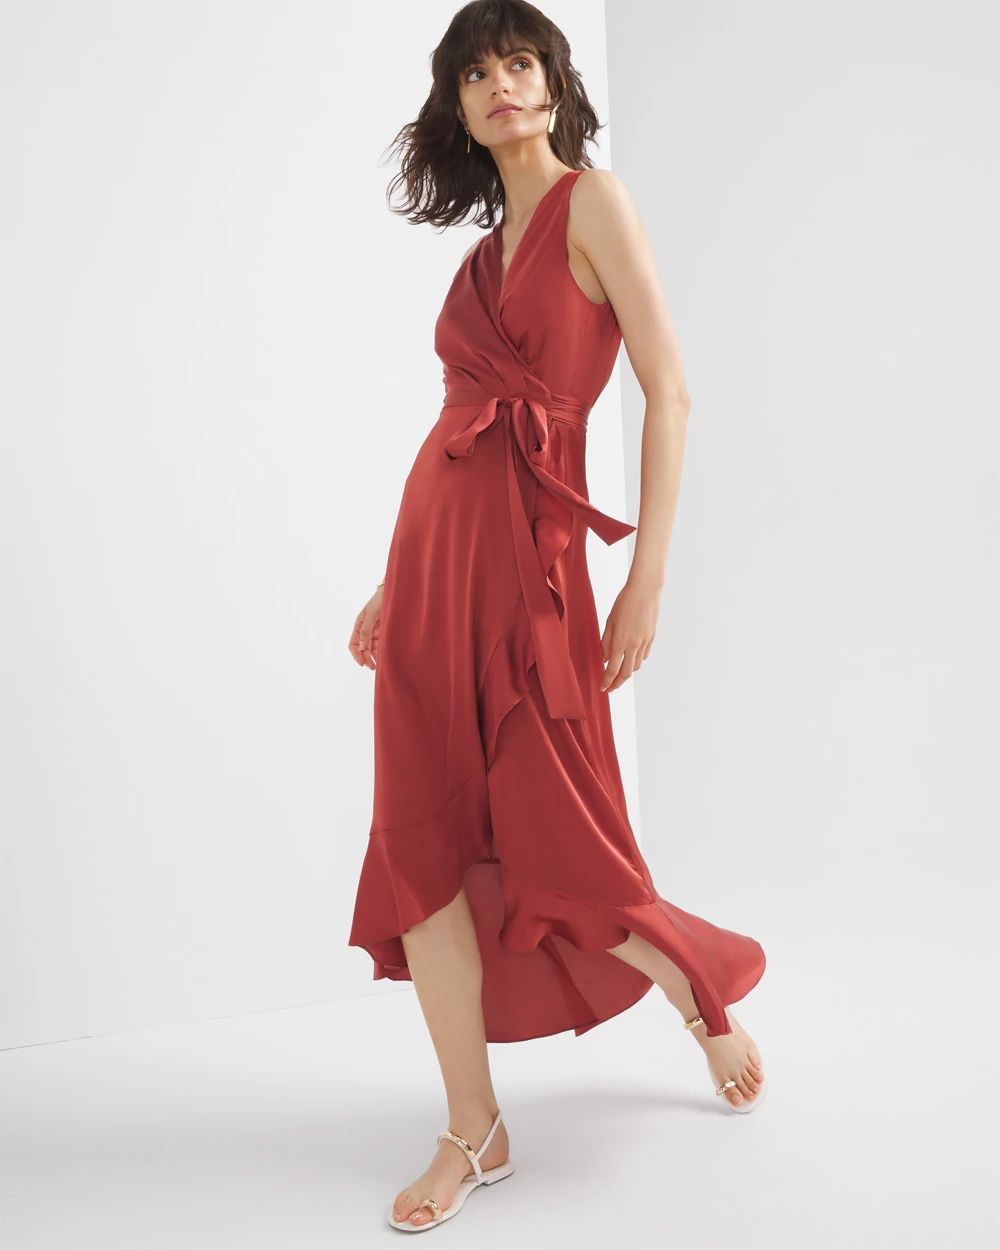 Sleeveless Satin Wrap Dress click to view larger image.